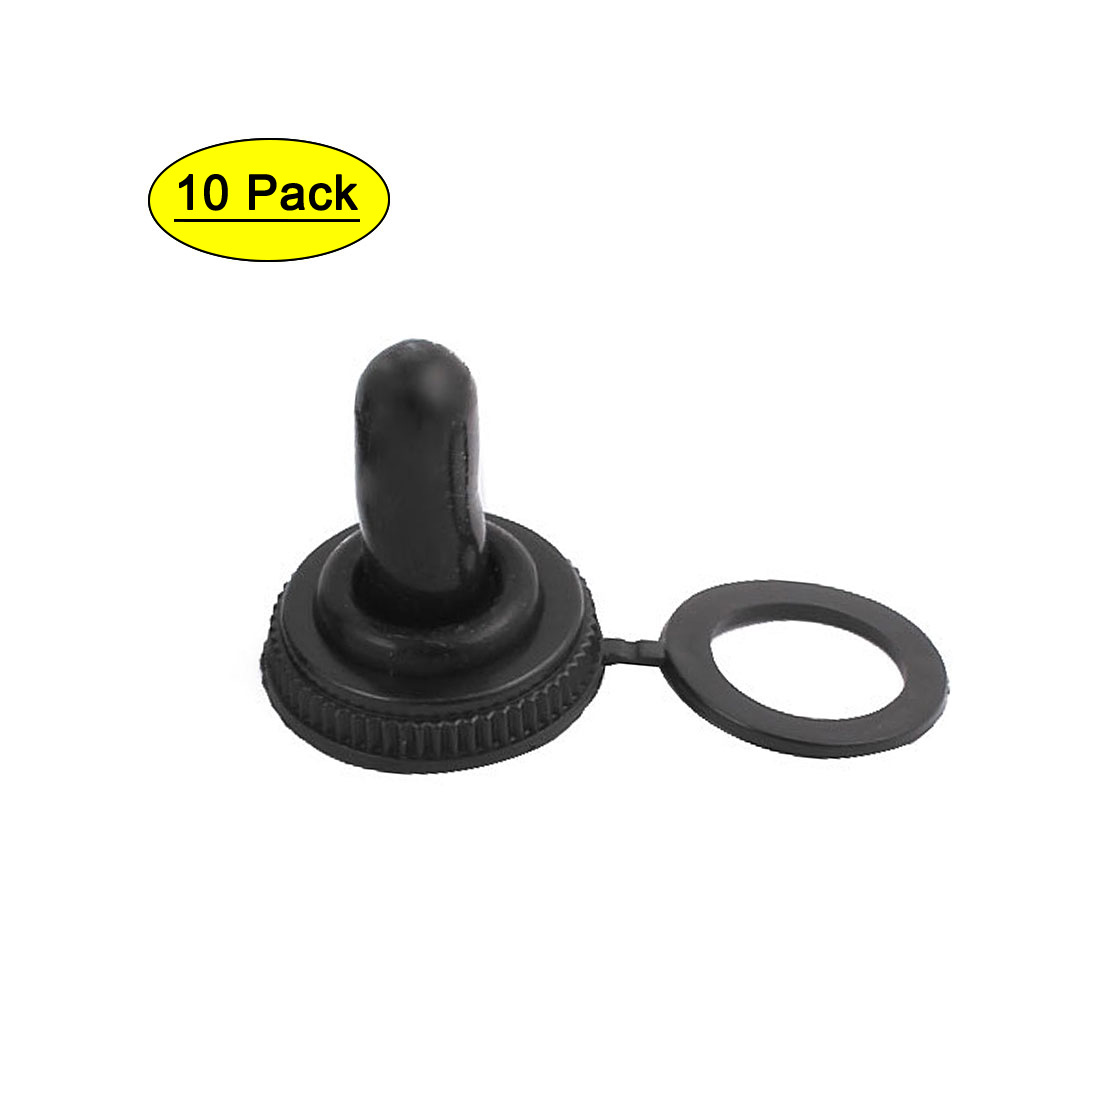 10Pcs 12mm Dia Toggle Switch Waterproof Rubber Cover Cap Waterproof Boot Cap TD